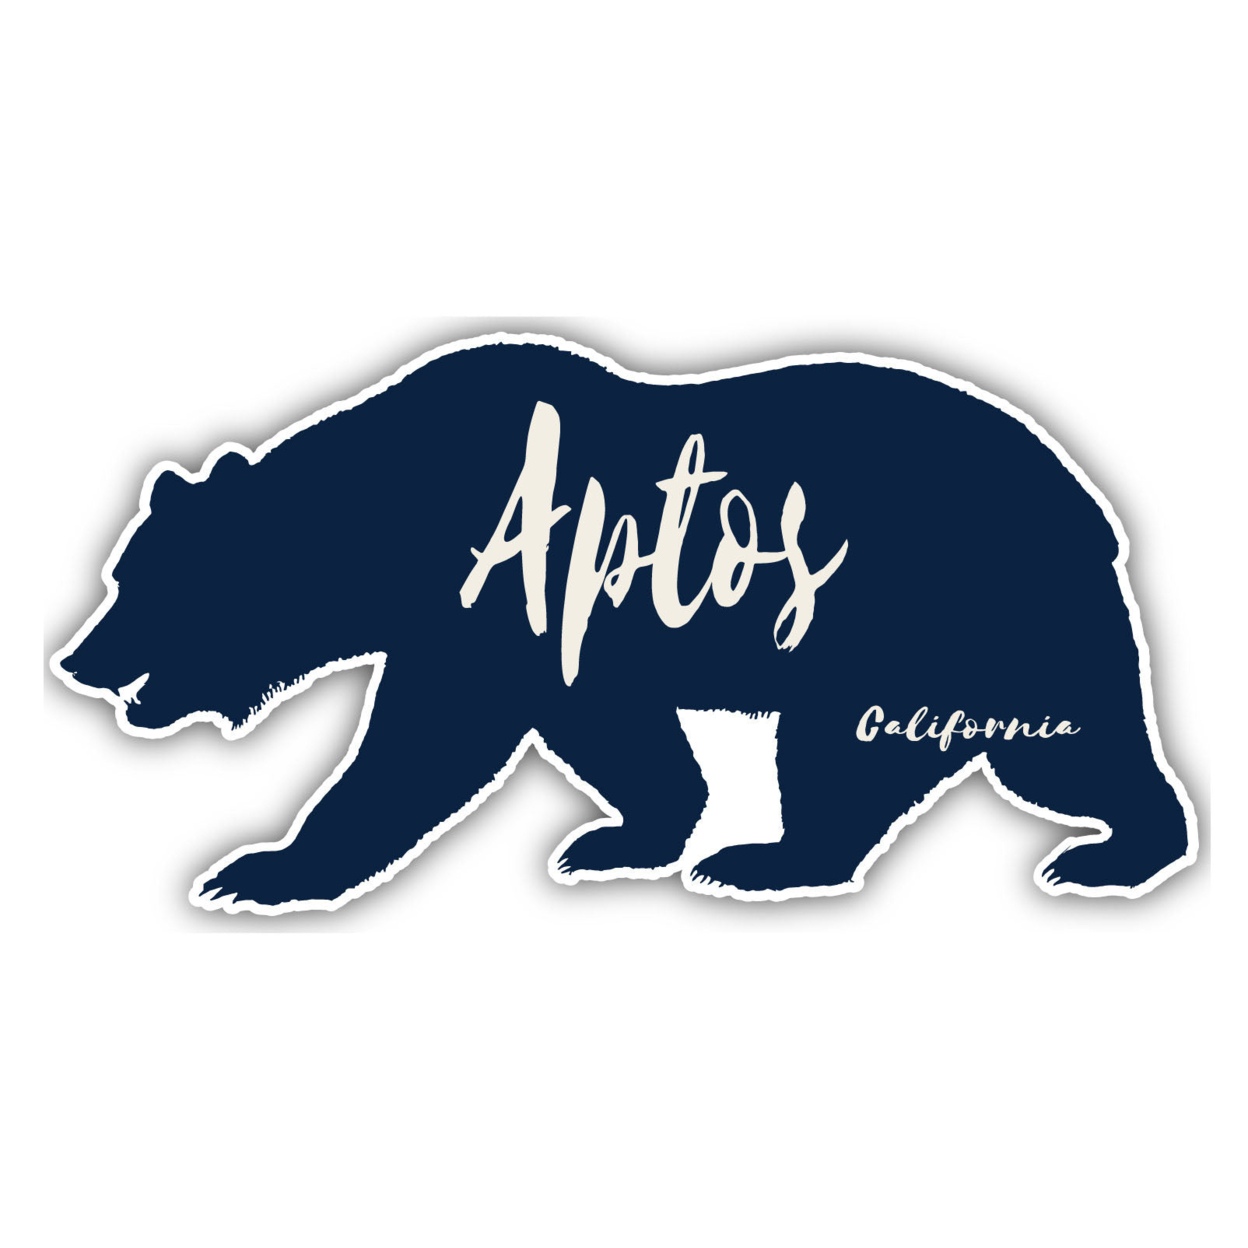 Aptos California Souvenir Decorative Stickers (Choose Theme And Size) - 4-Pack, 6-Inch, Tent